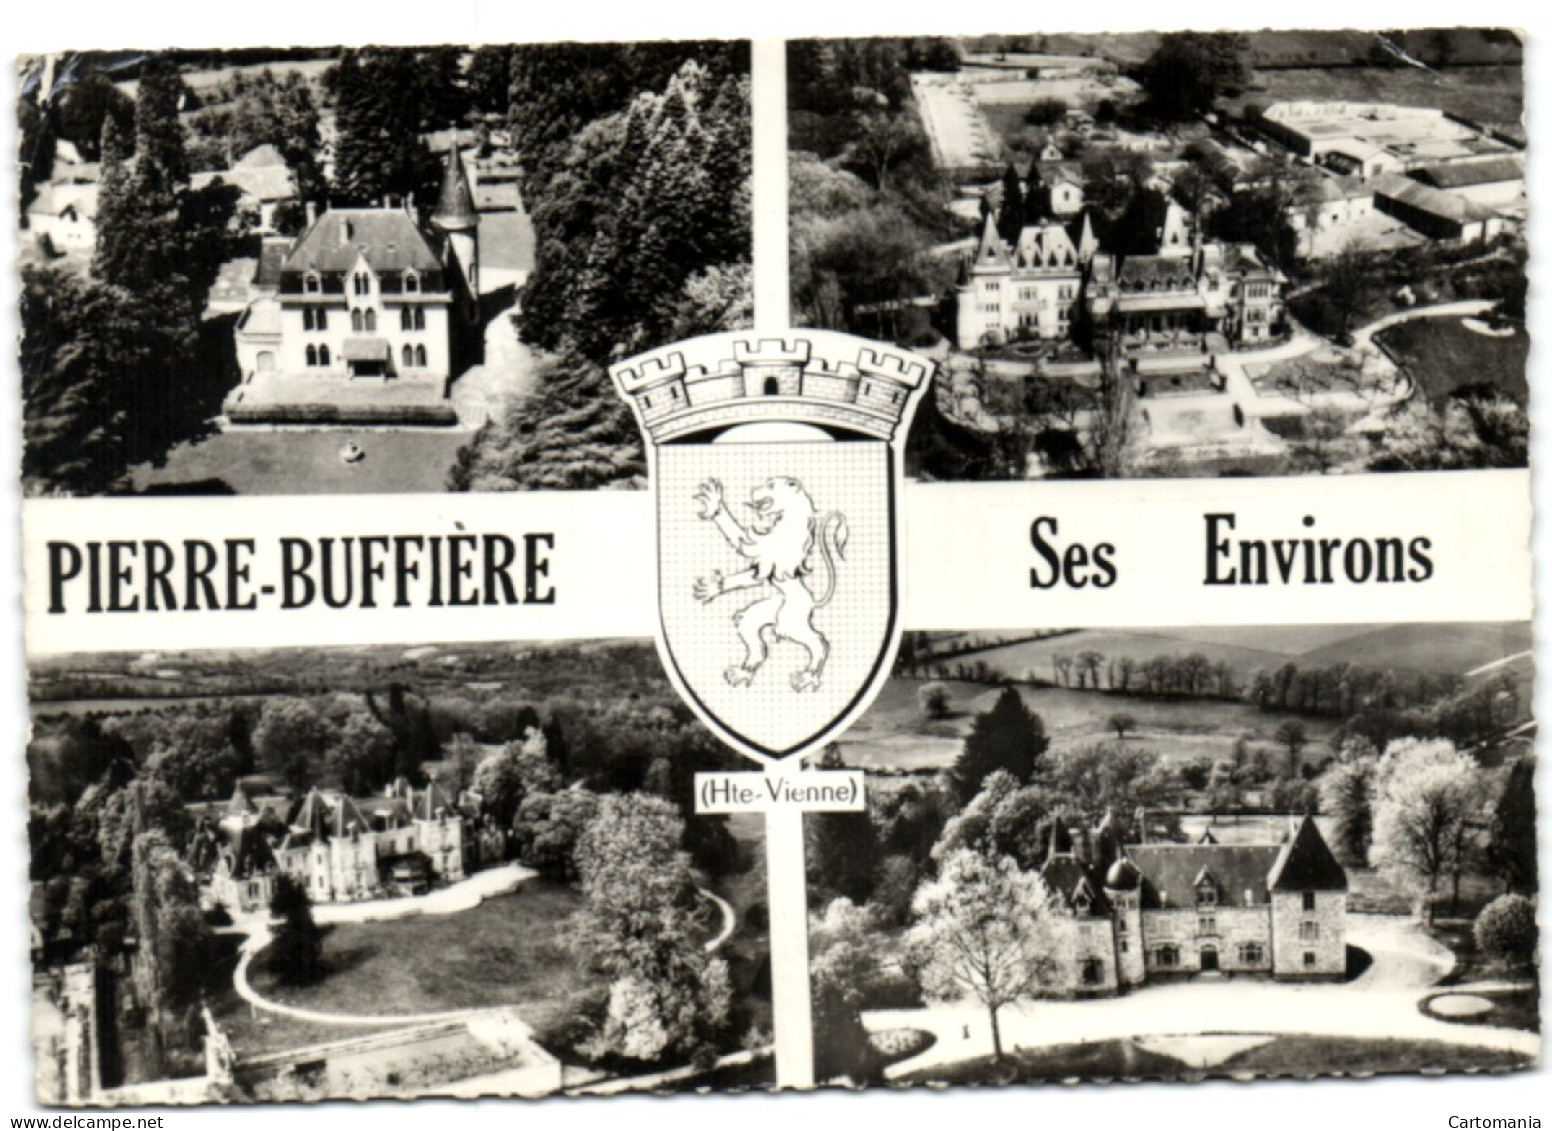 Pierre-Buffière - Ses Environs - Pierre Buffiere